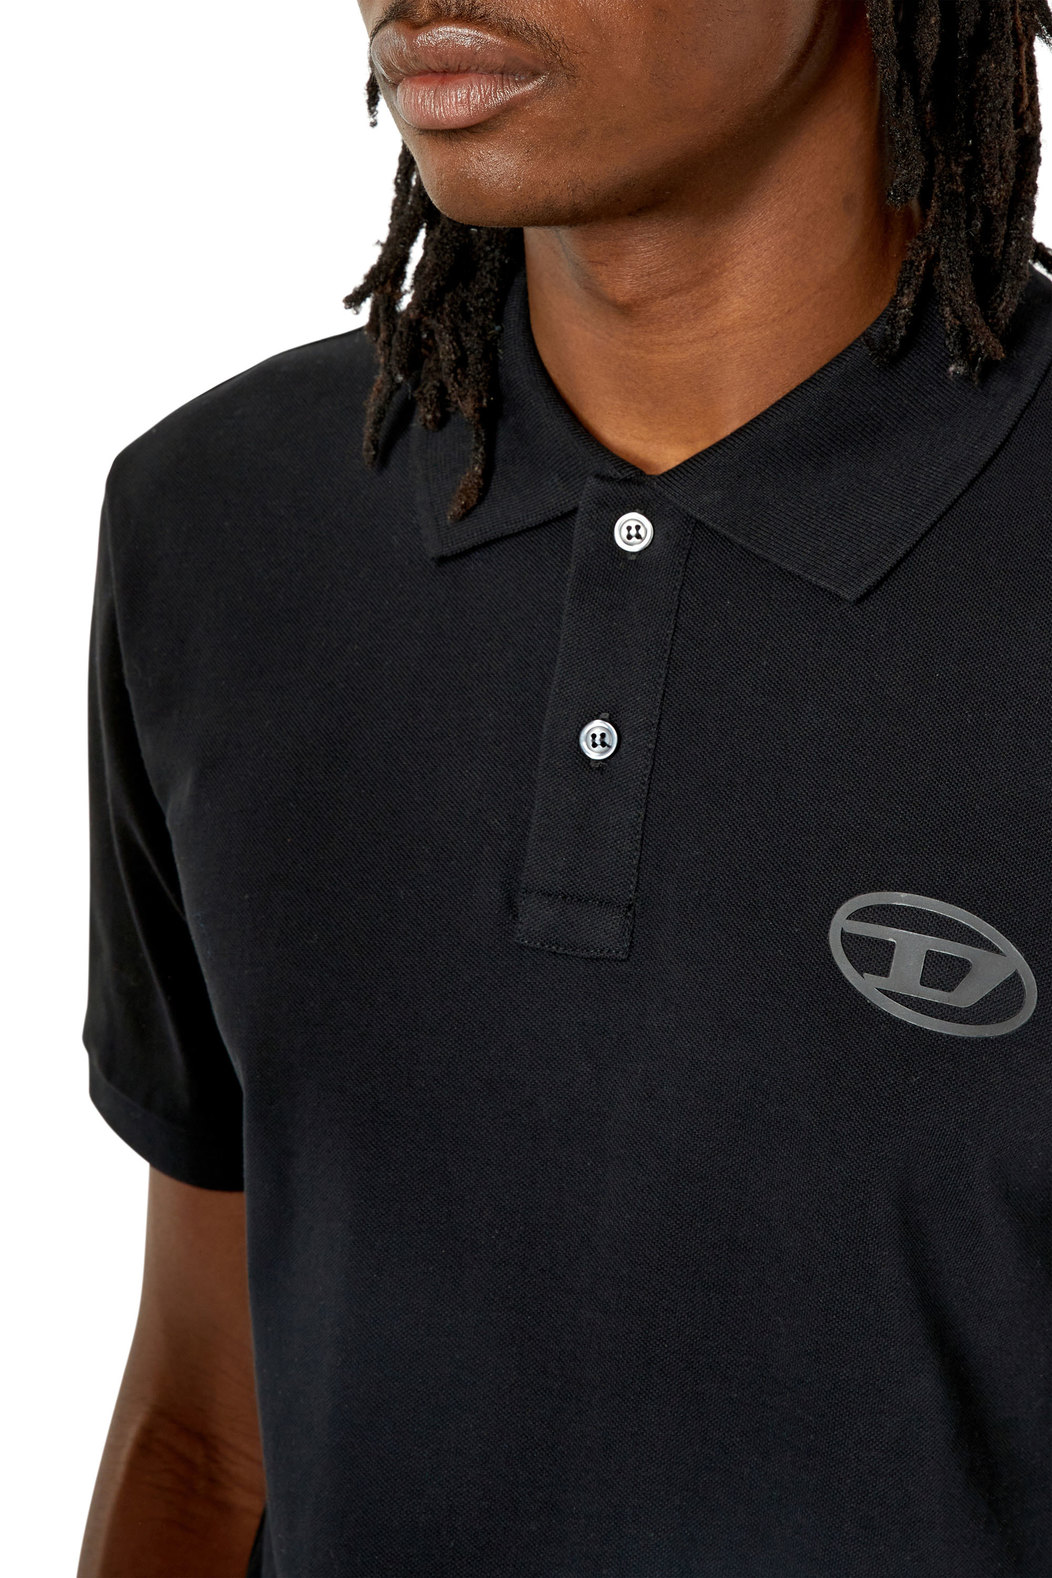 Polo shirt with raised oval D logo